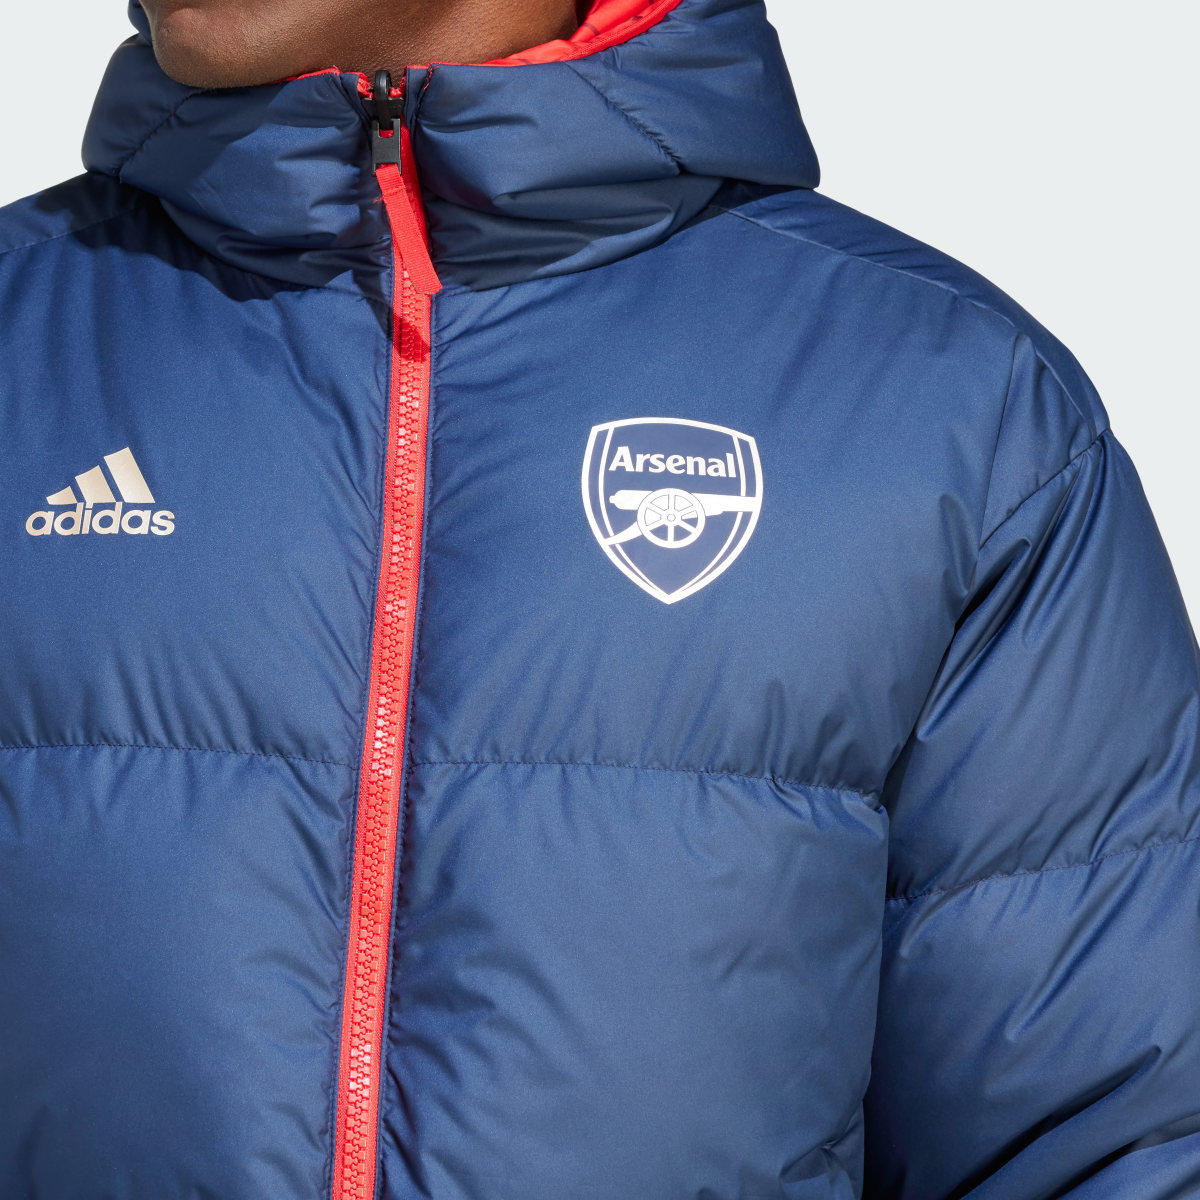 Adidas Arsenal DNA Down Jacket. 8